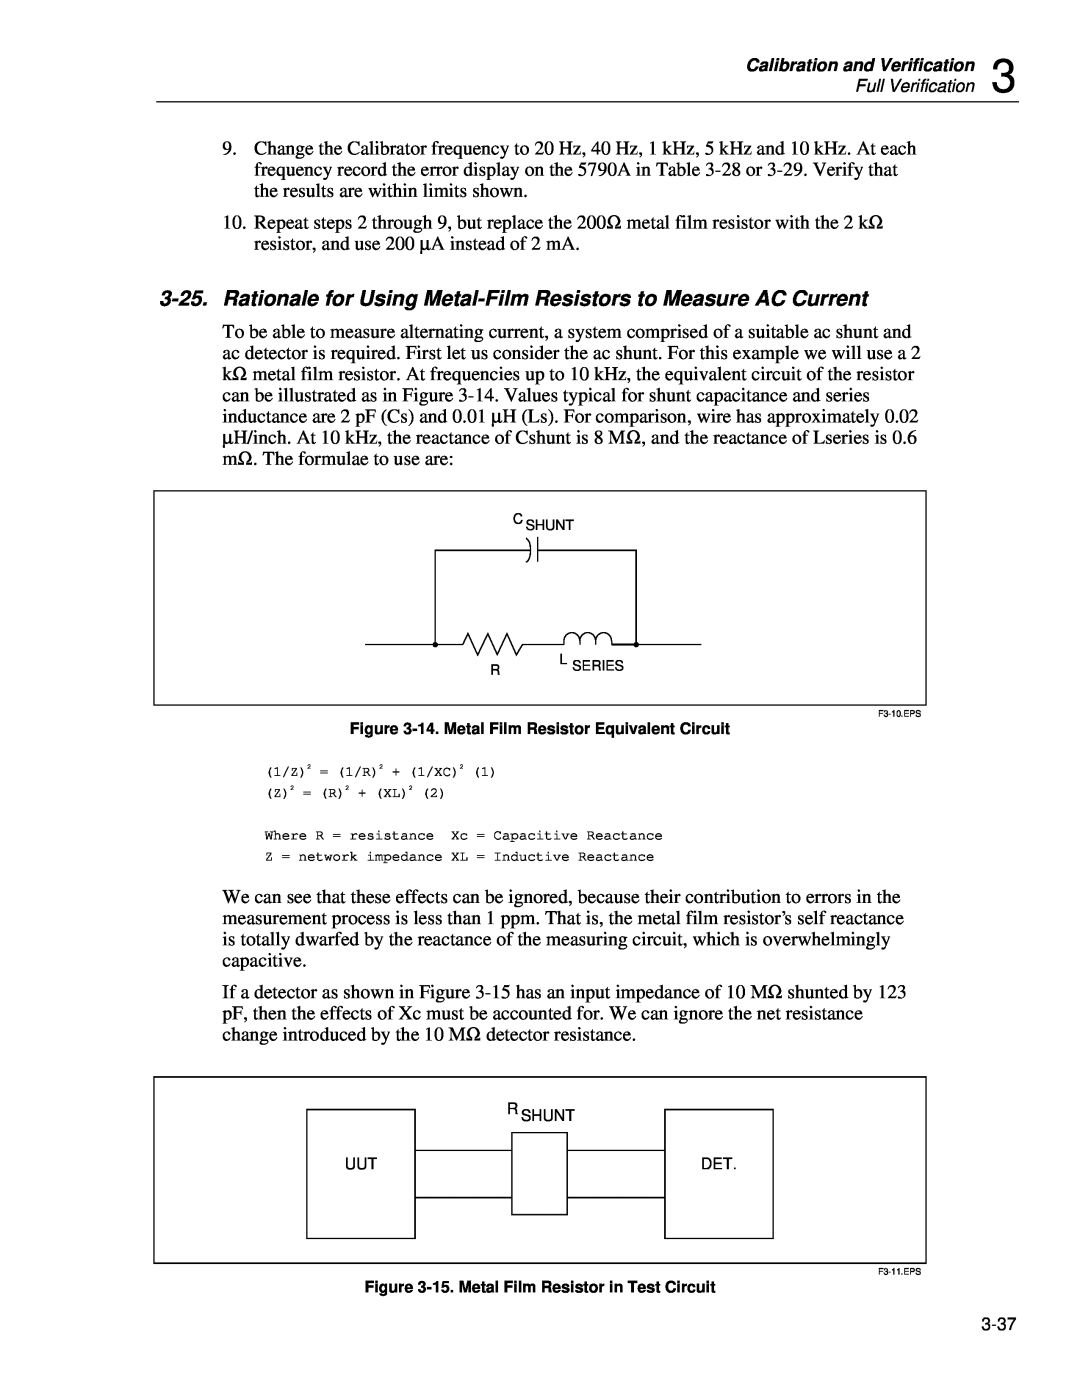 Fluke 5720A Rationale for Using Metal-Film Resistors to Measure AC Current, 14. Metal Film Resistor Equivalent Circuit 